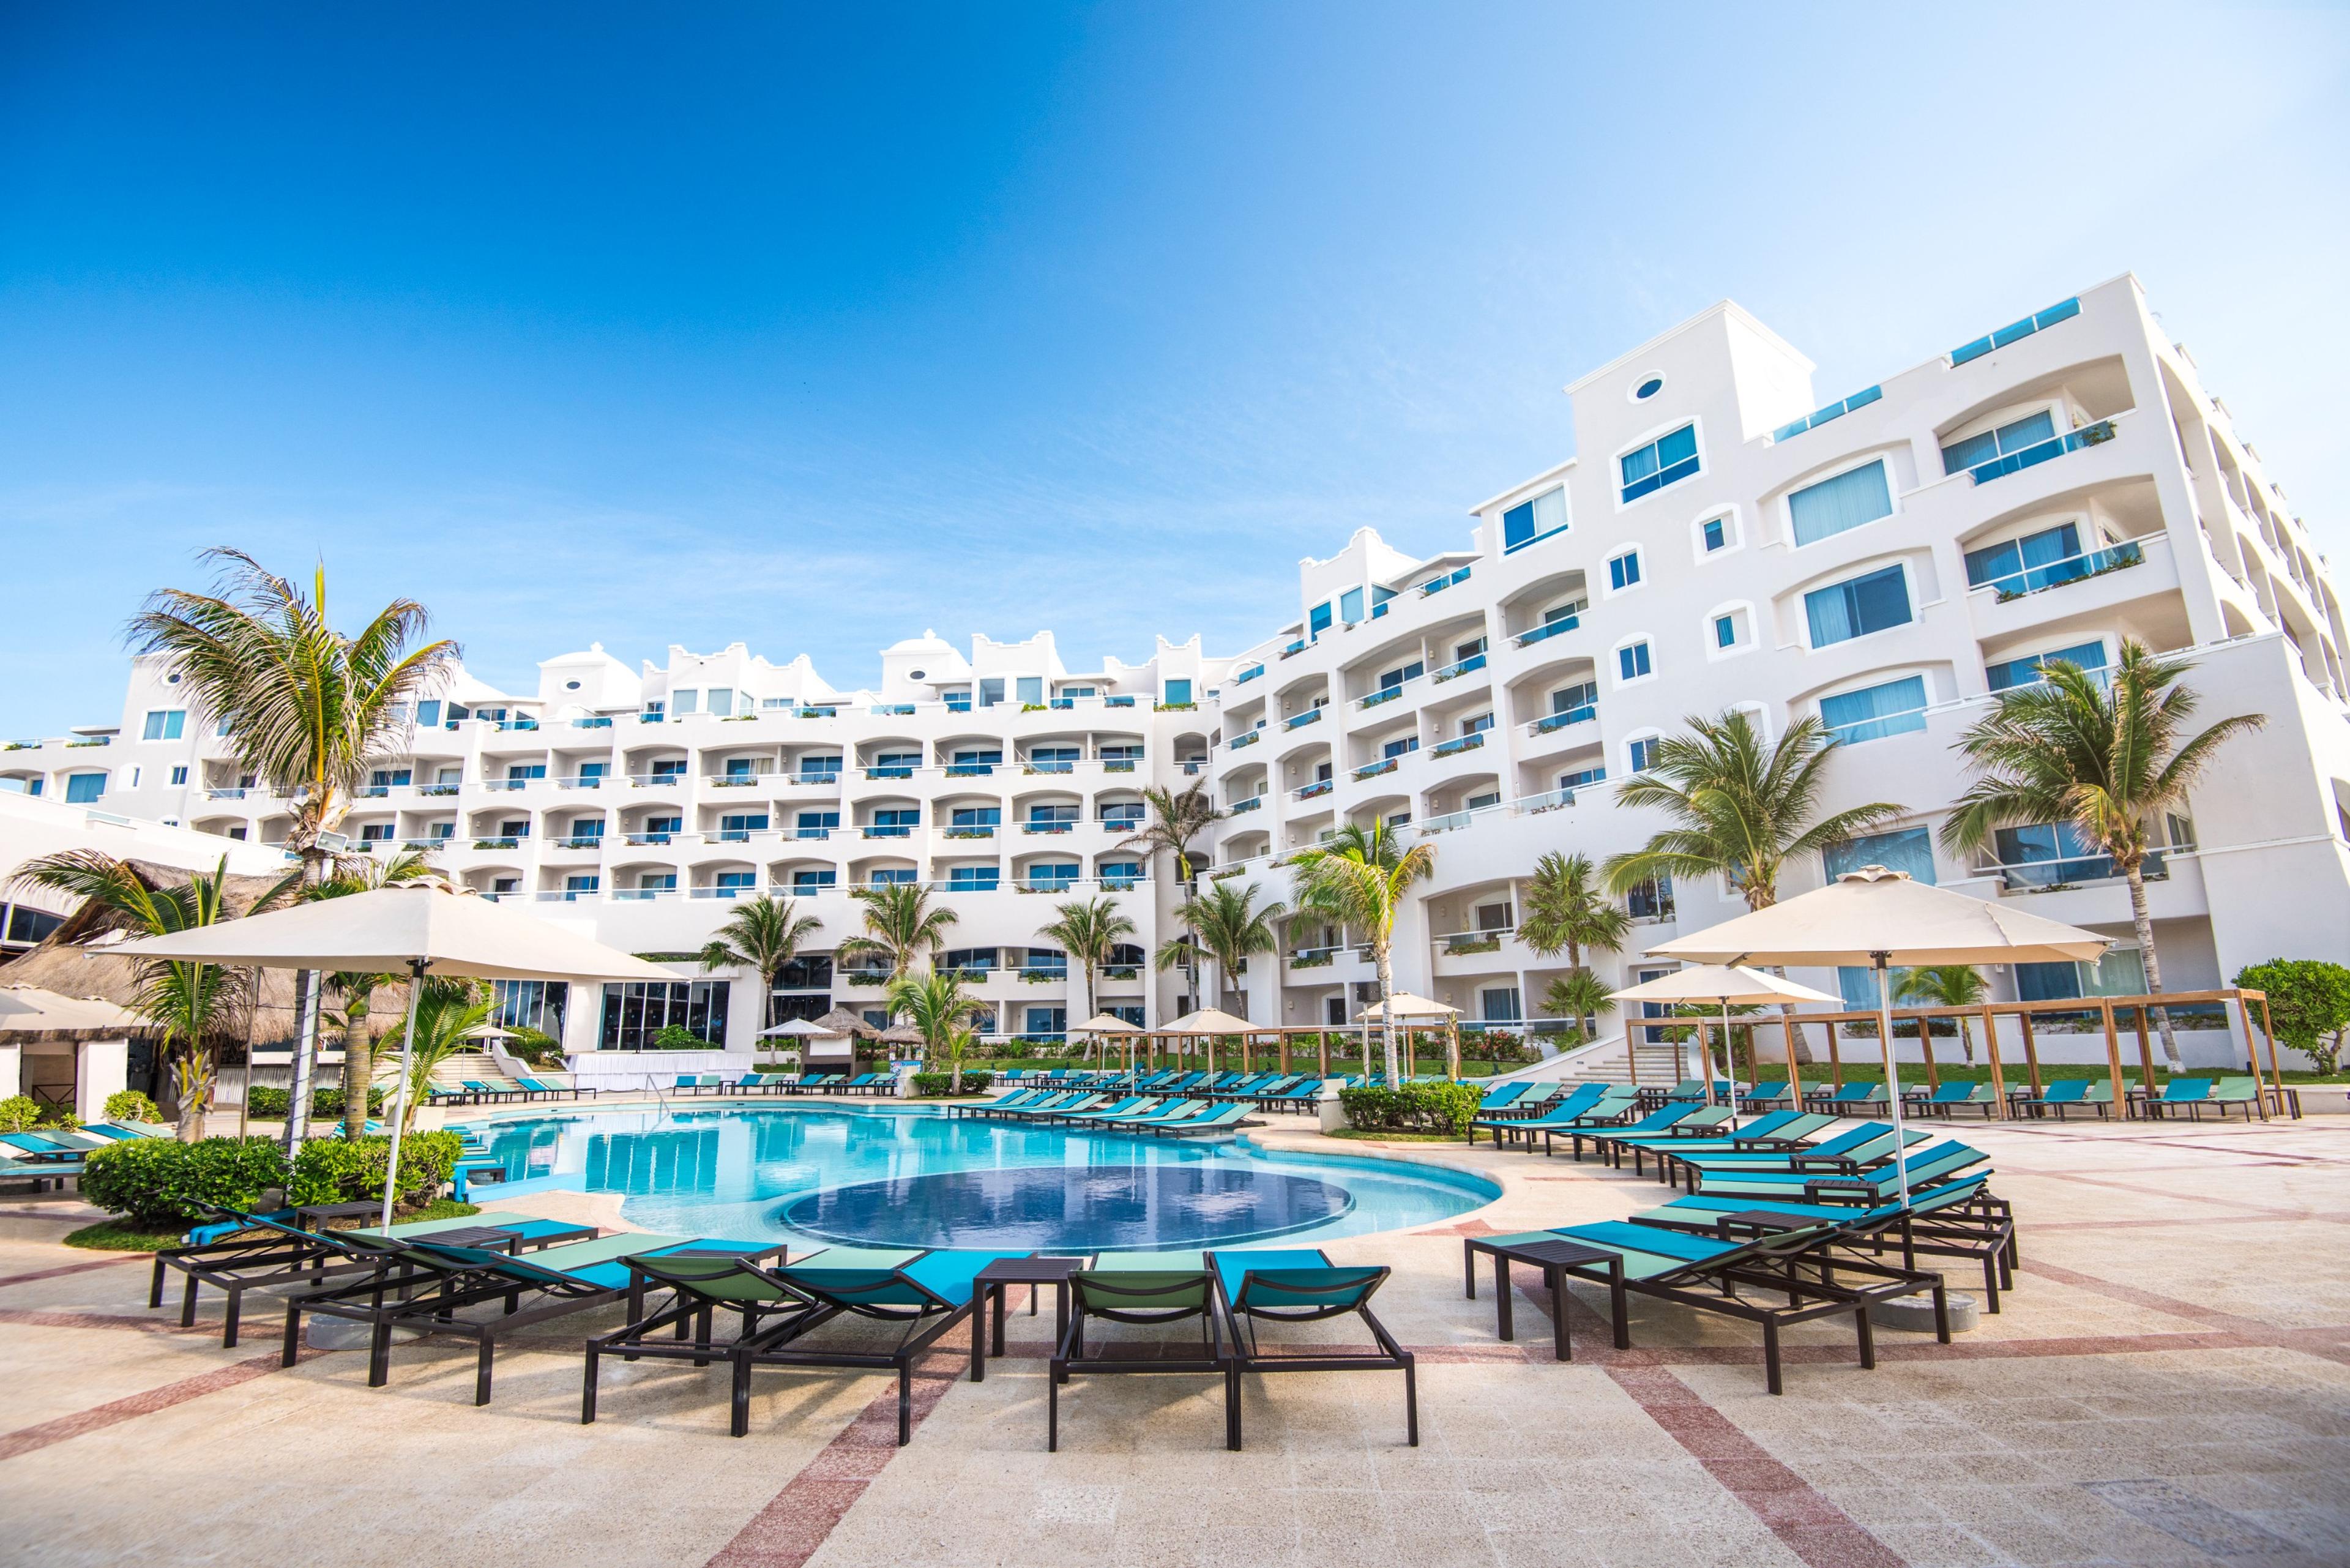 Wyndham Alltra Cancun - All-Inclusive Resort